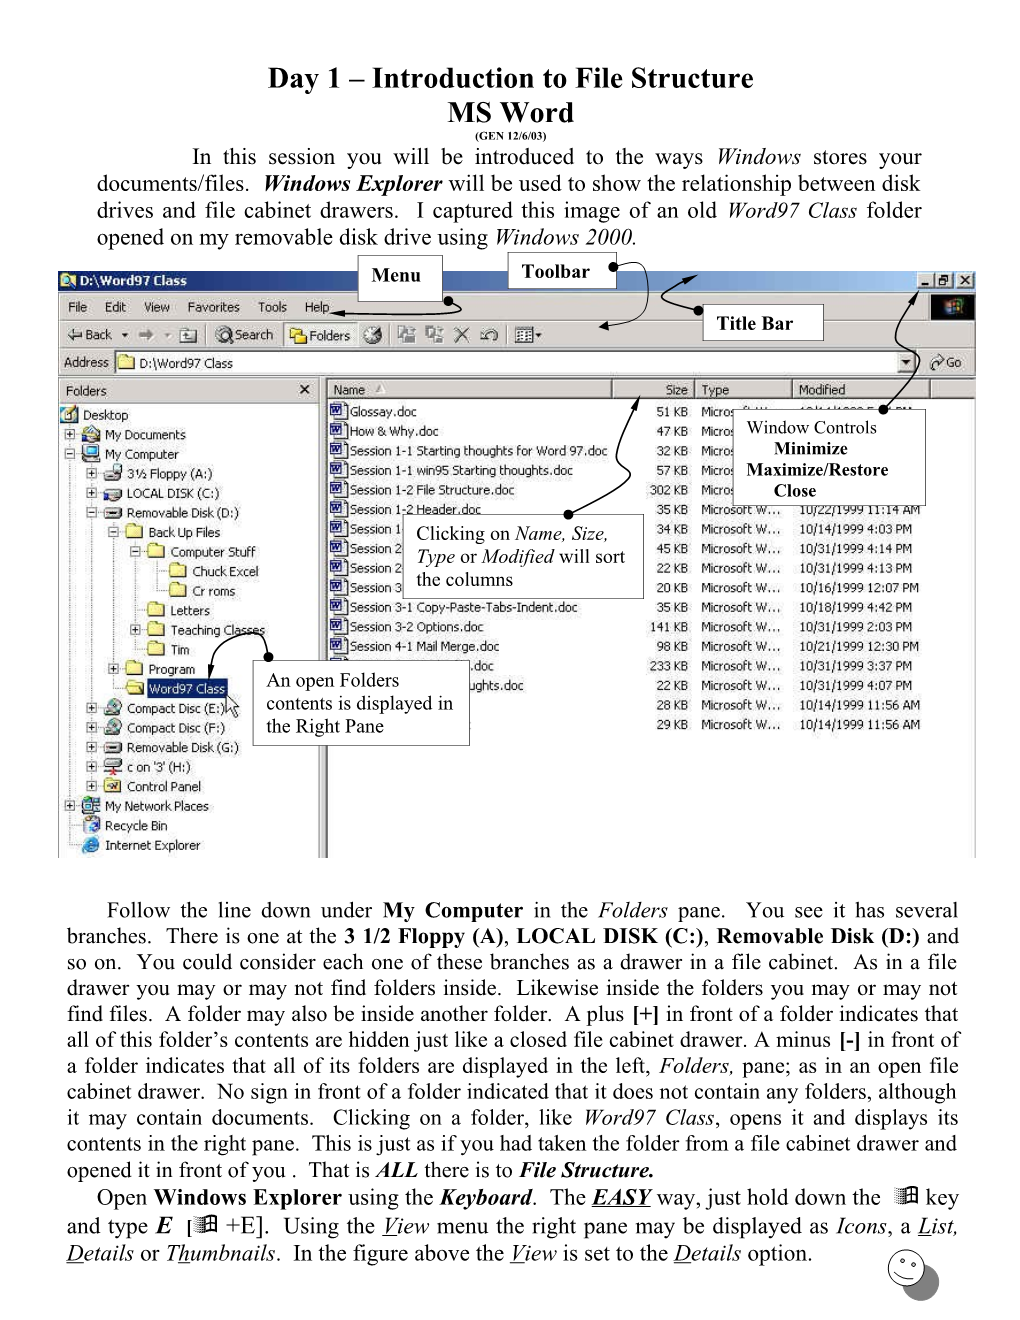 File Structure Using Windows Explorer